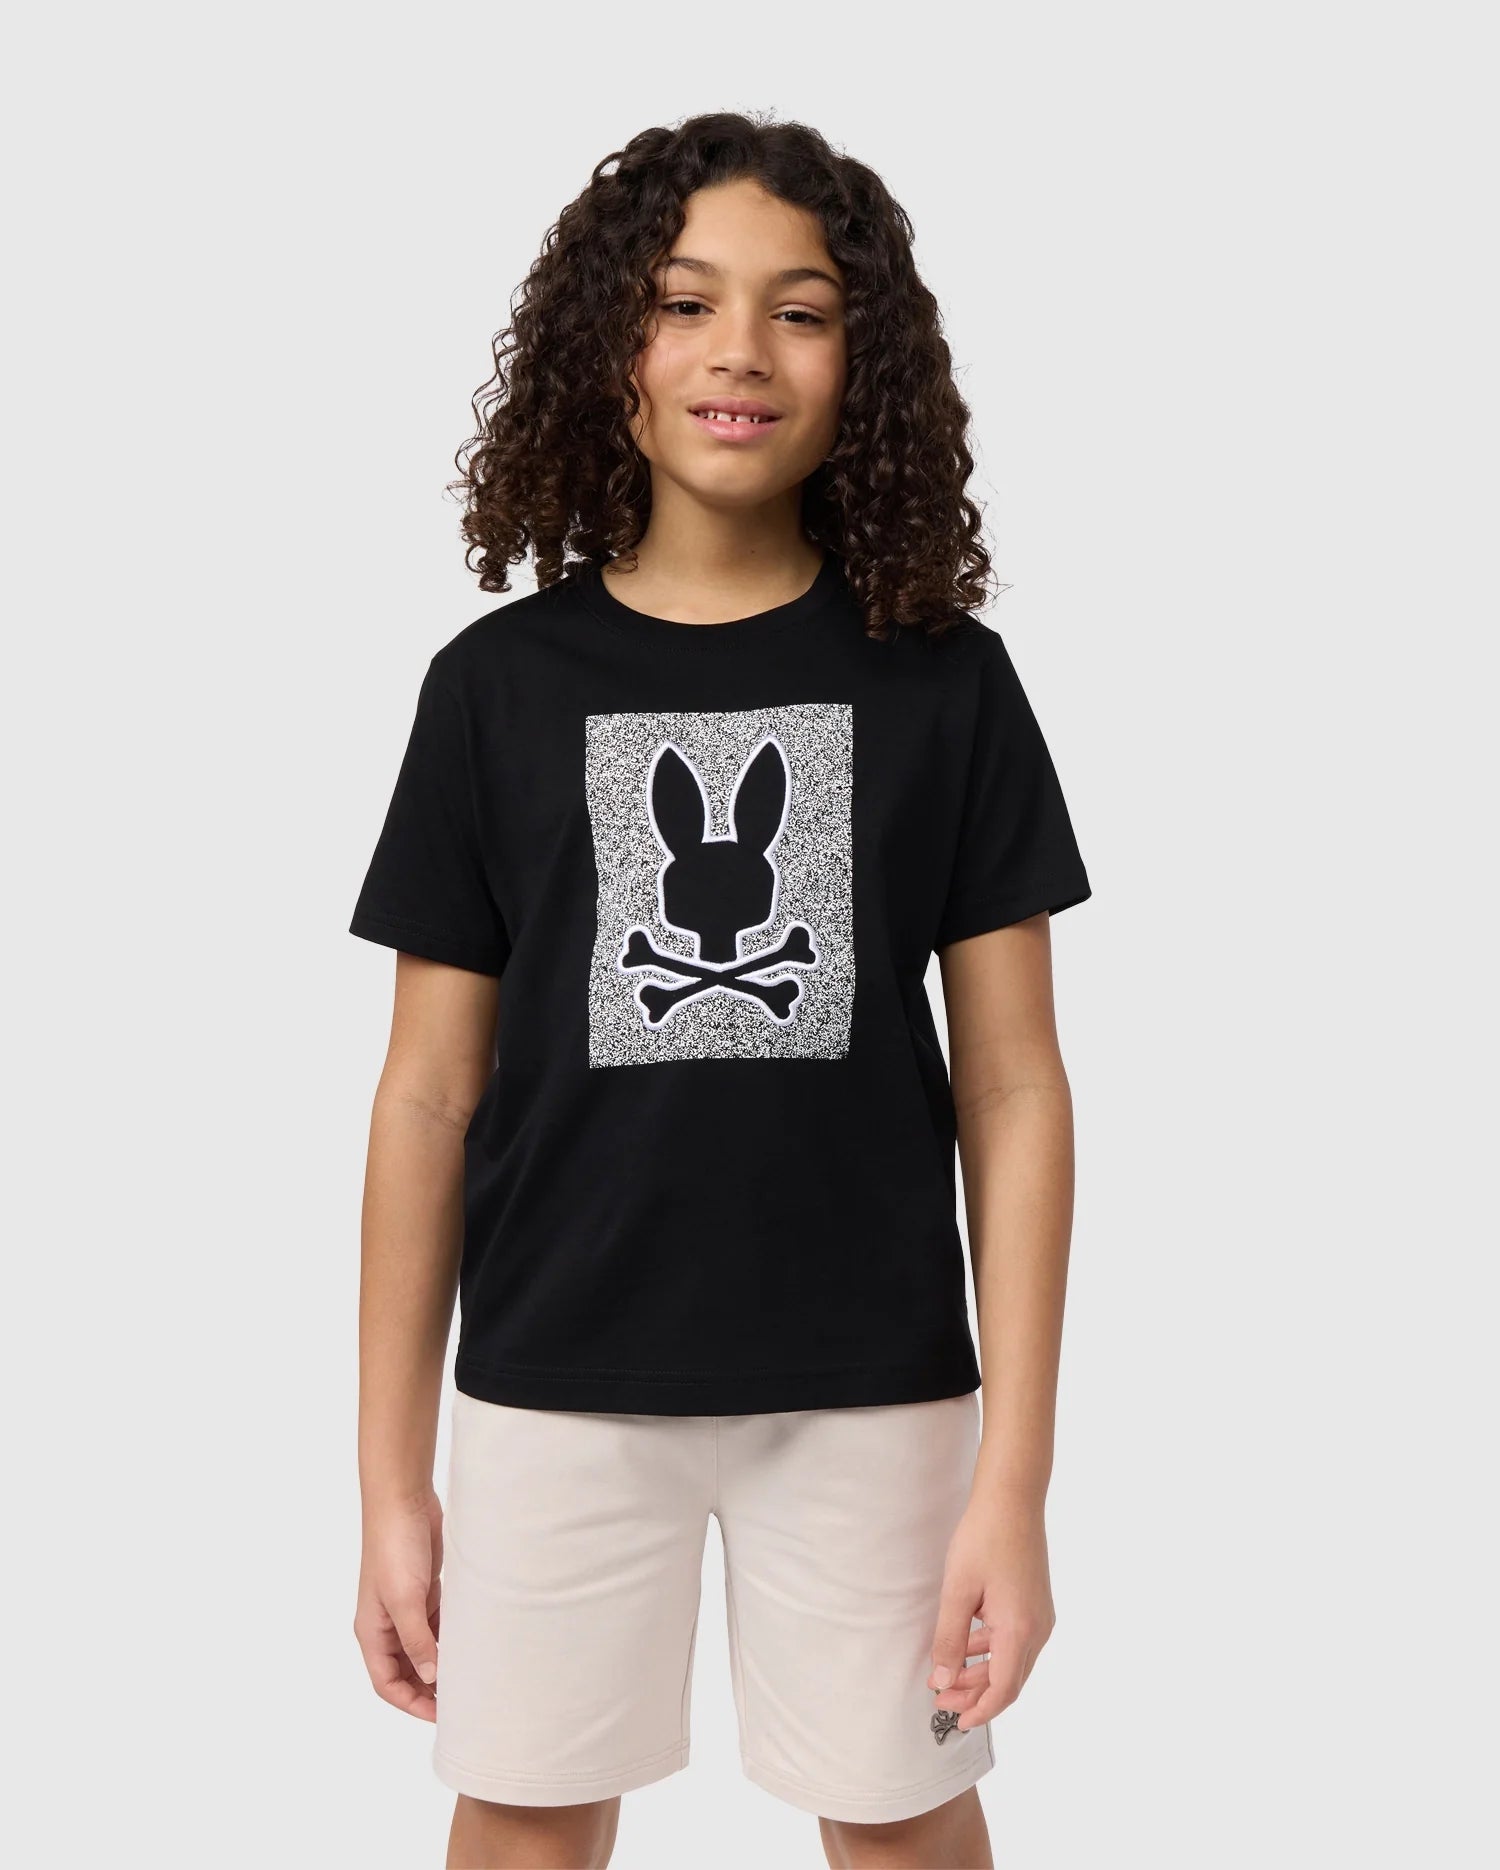 Kids Tops – Psycho Bunny Canada